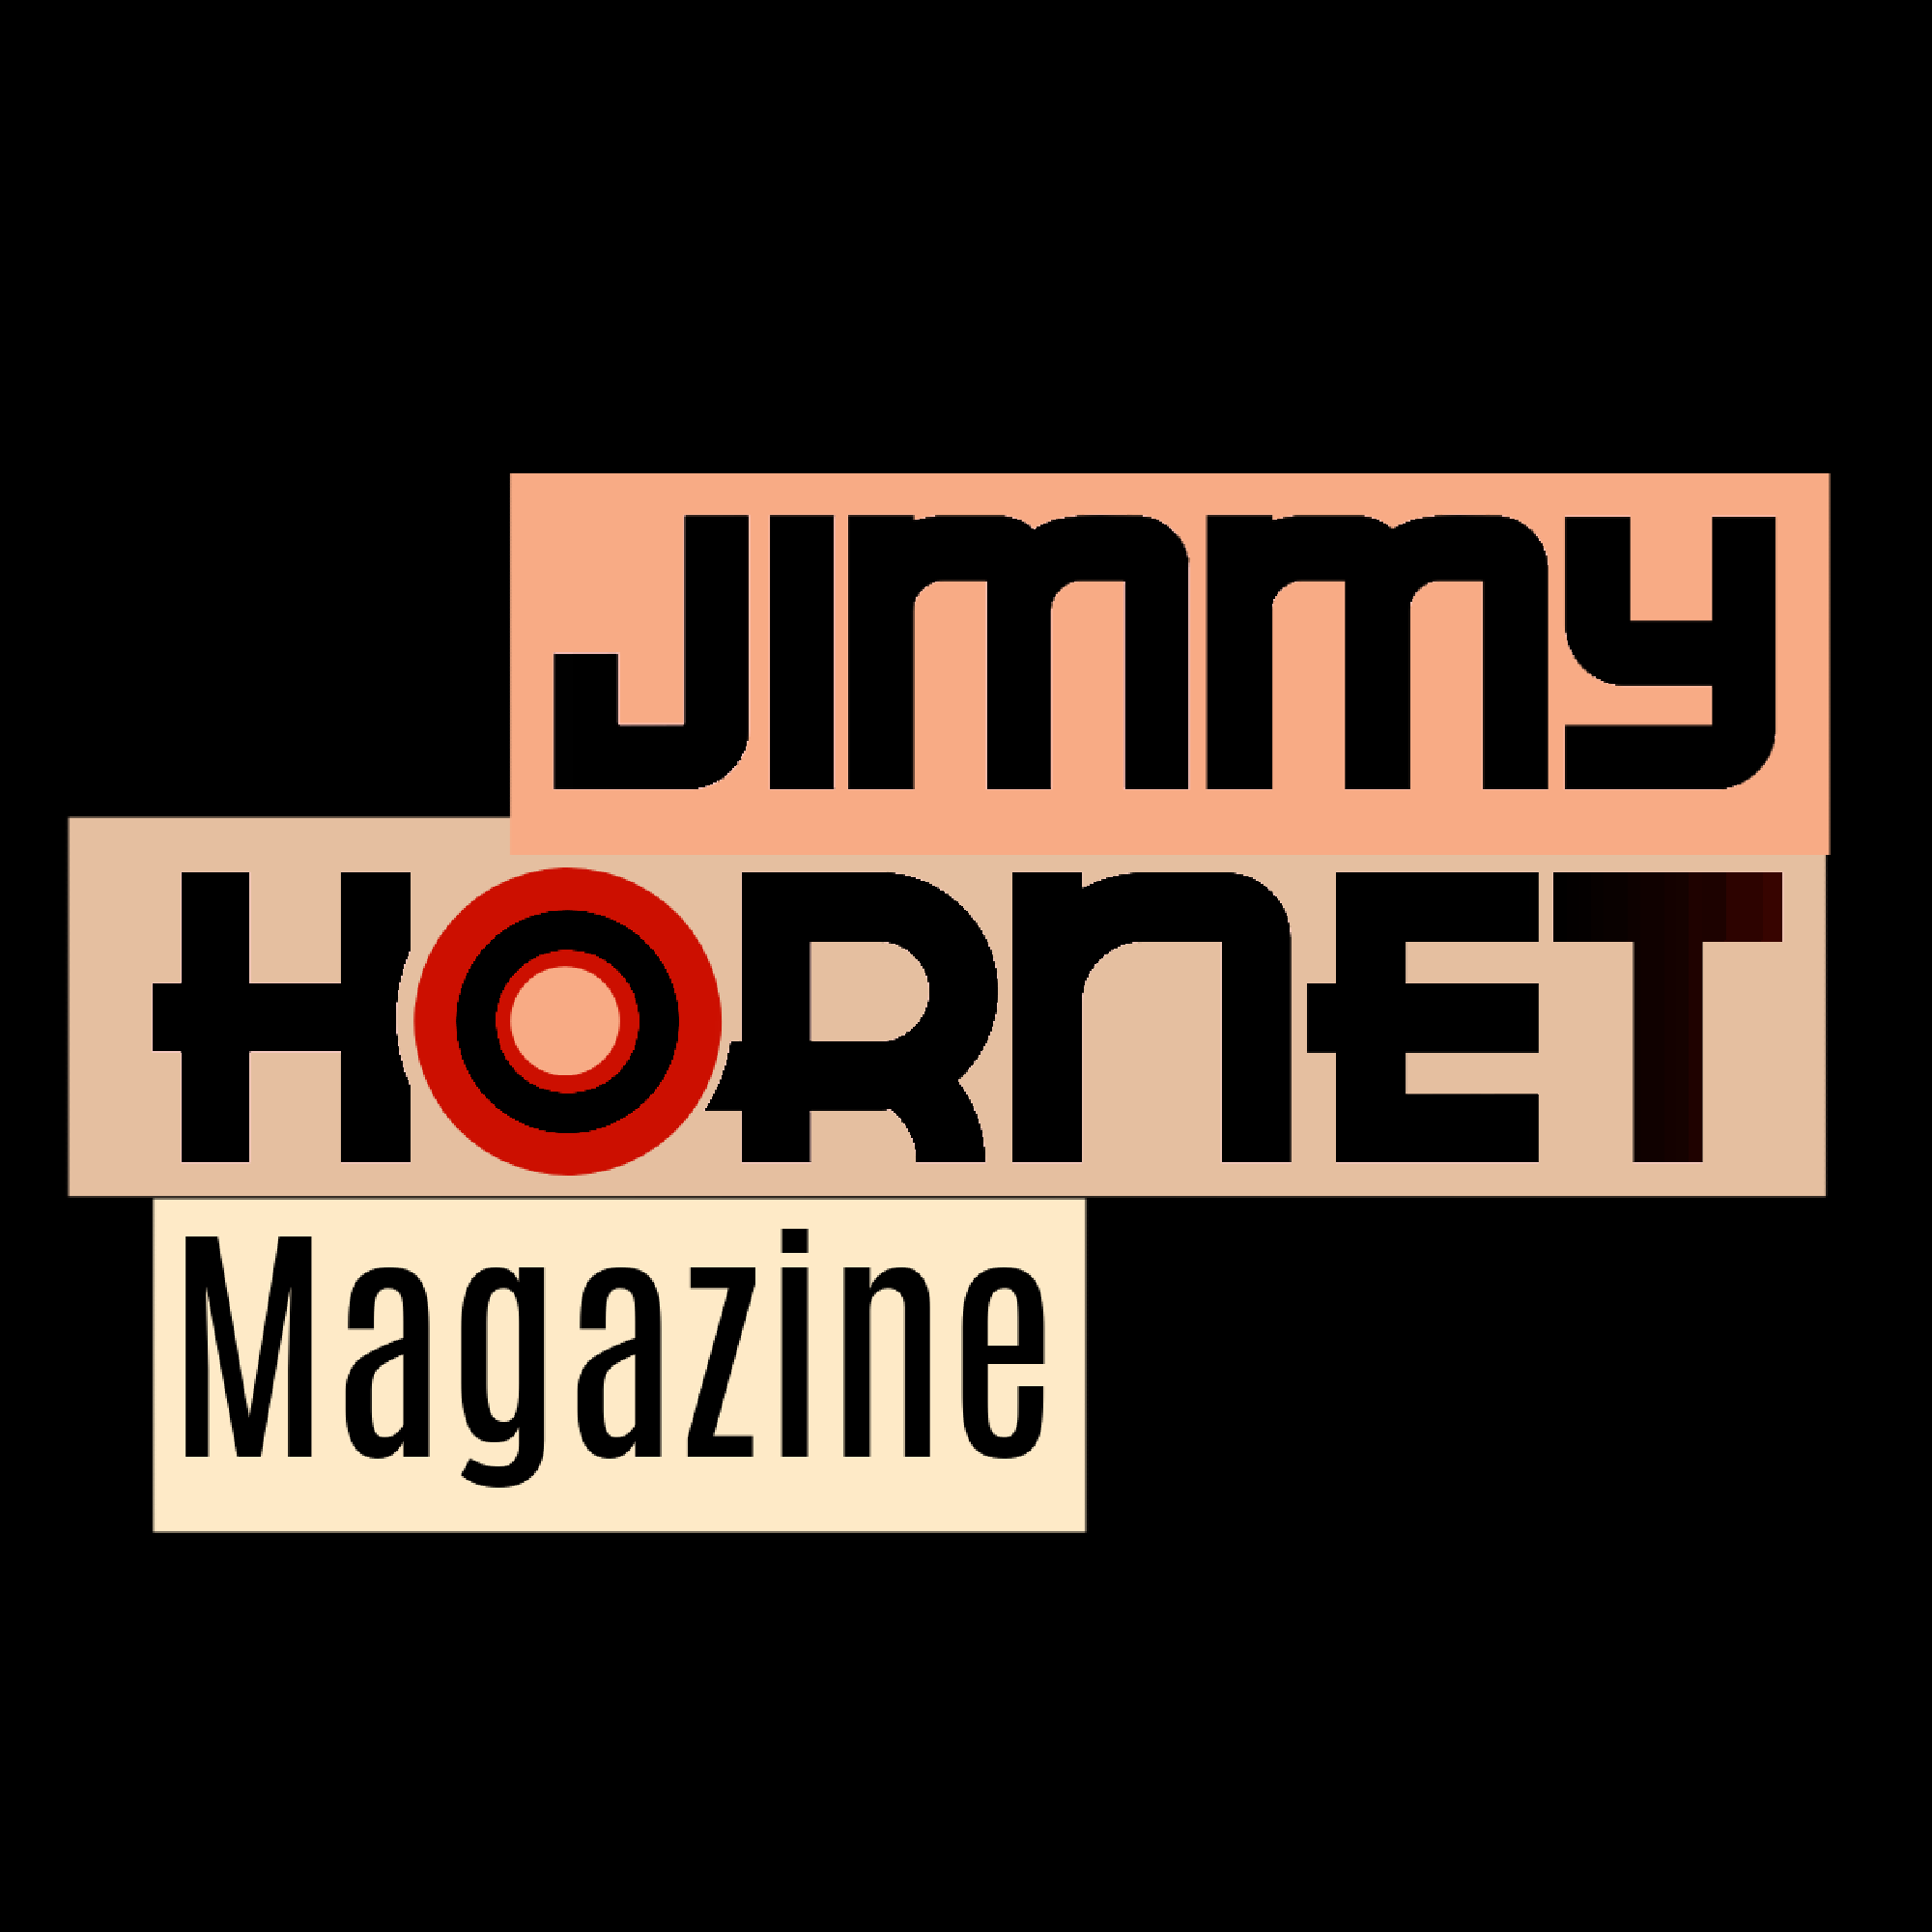 Jimmy Hornet Magazine